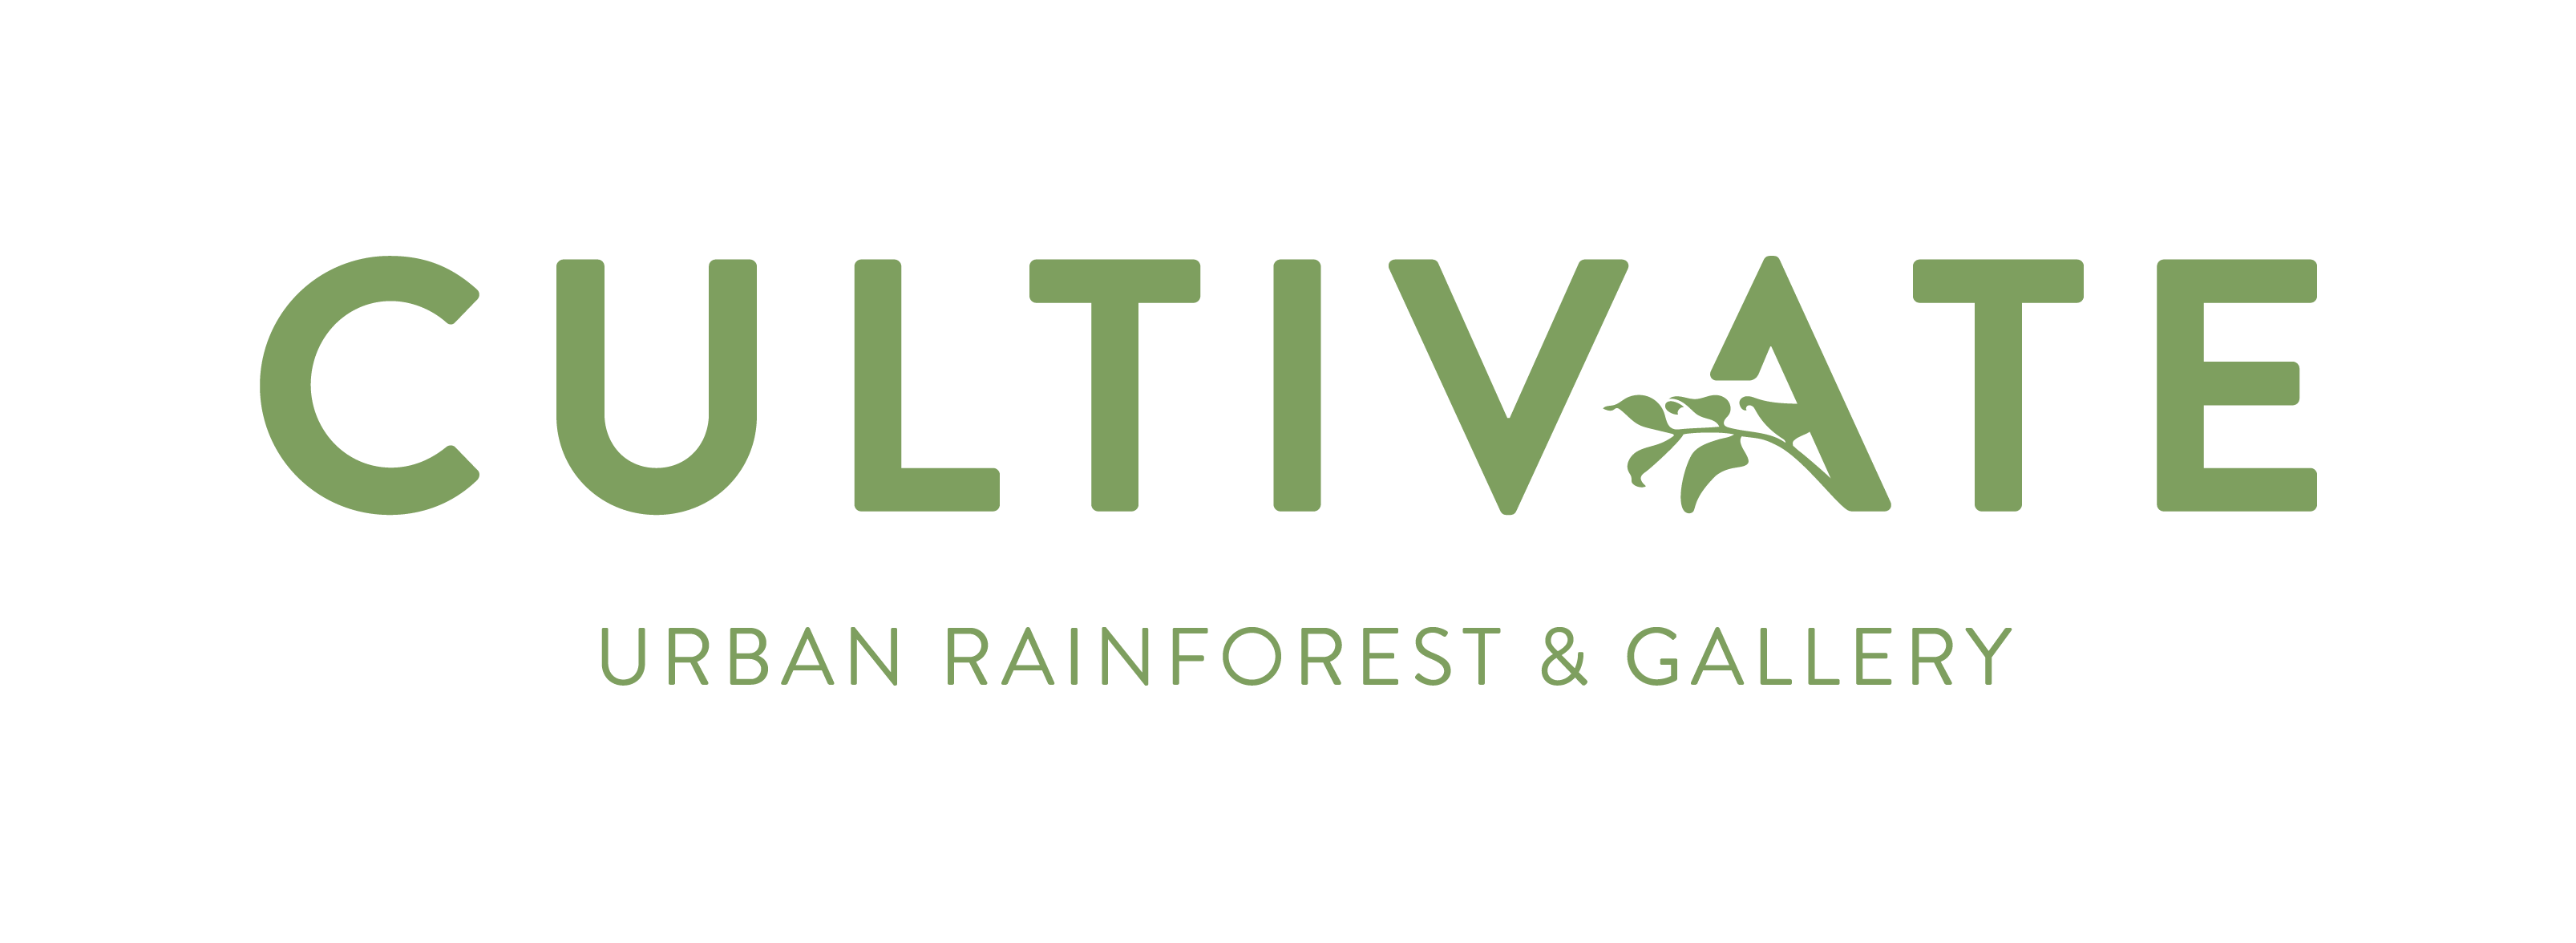 Cultivate Urban Rainforest & Gallery